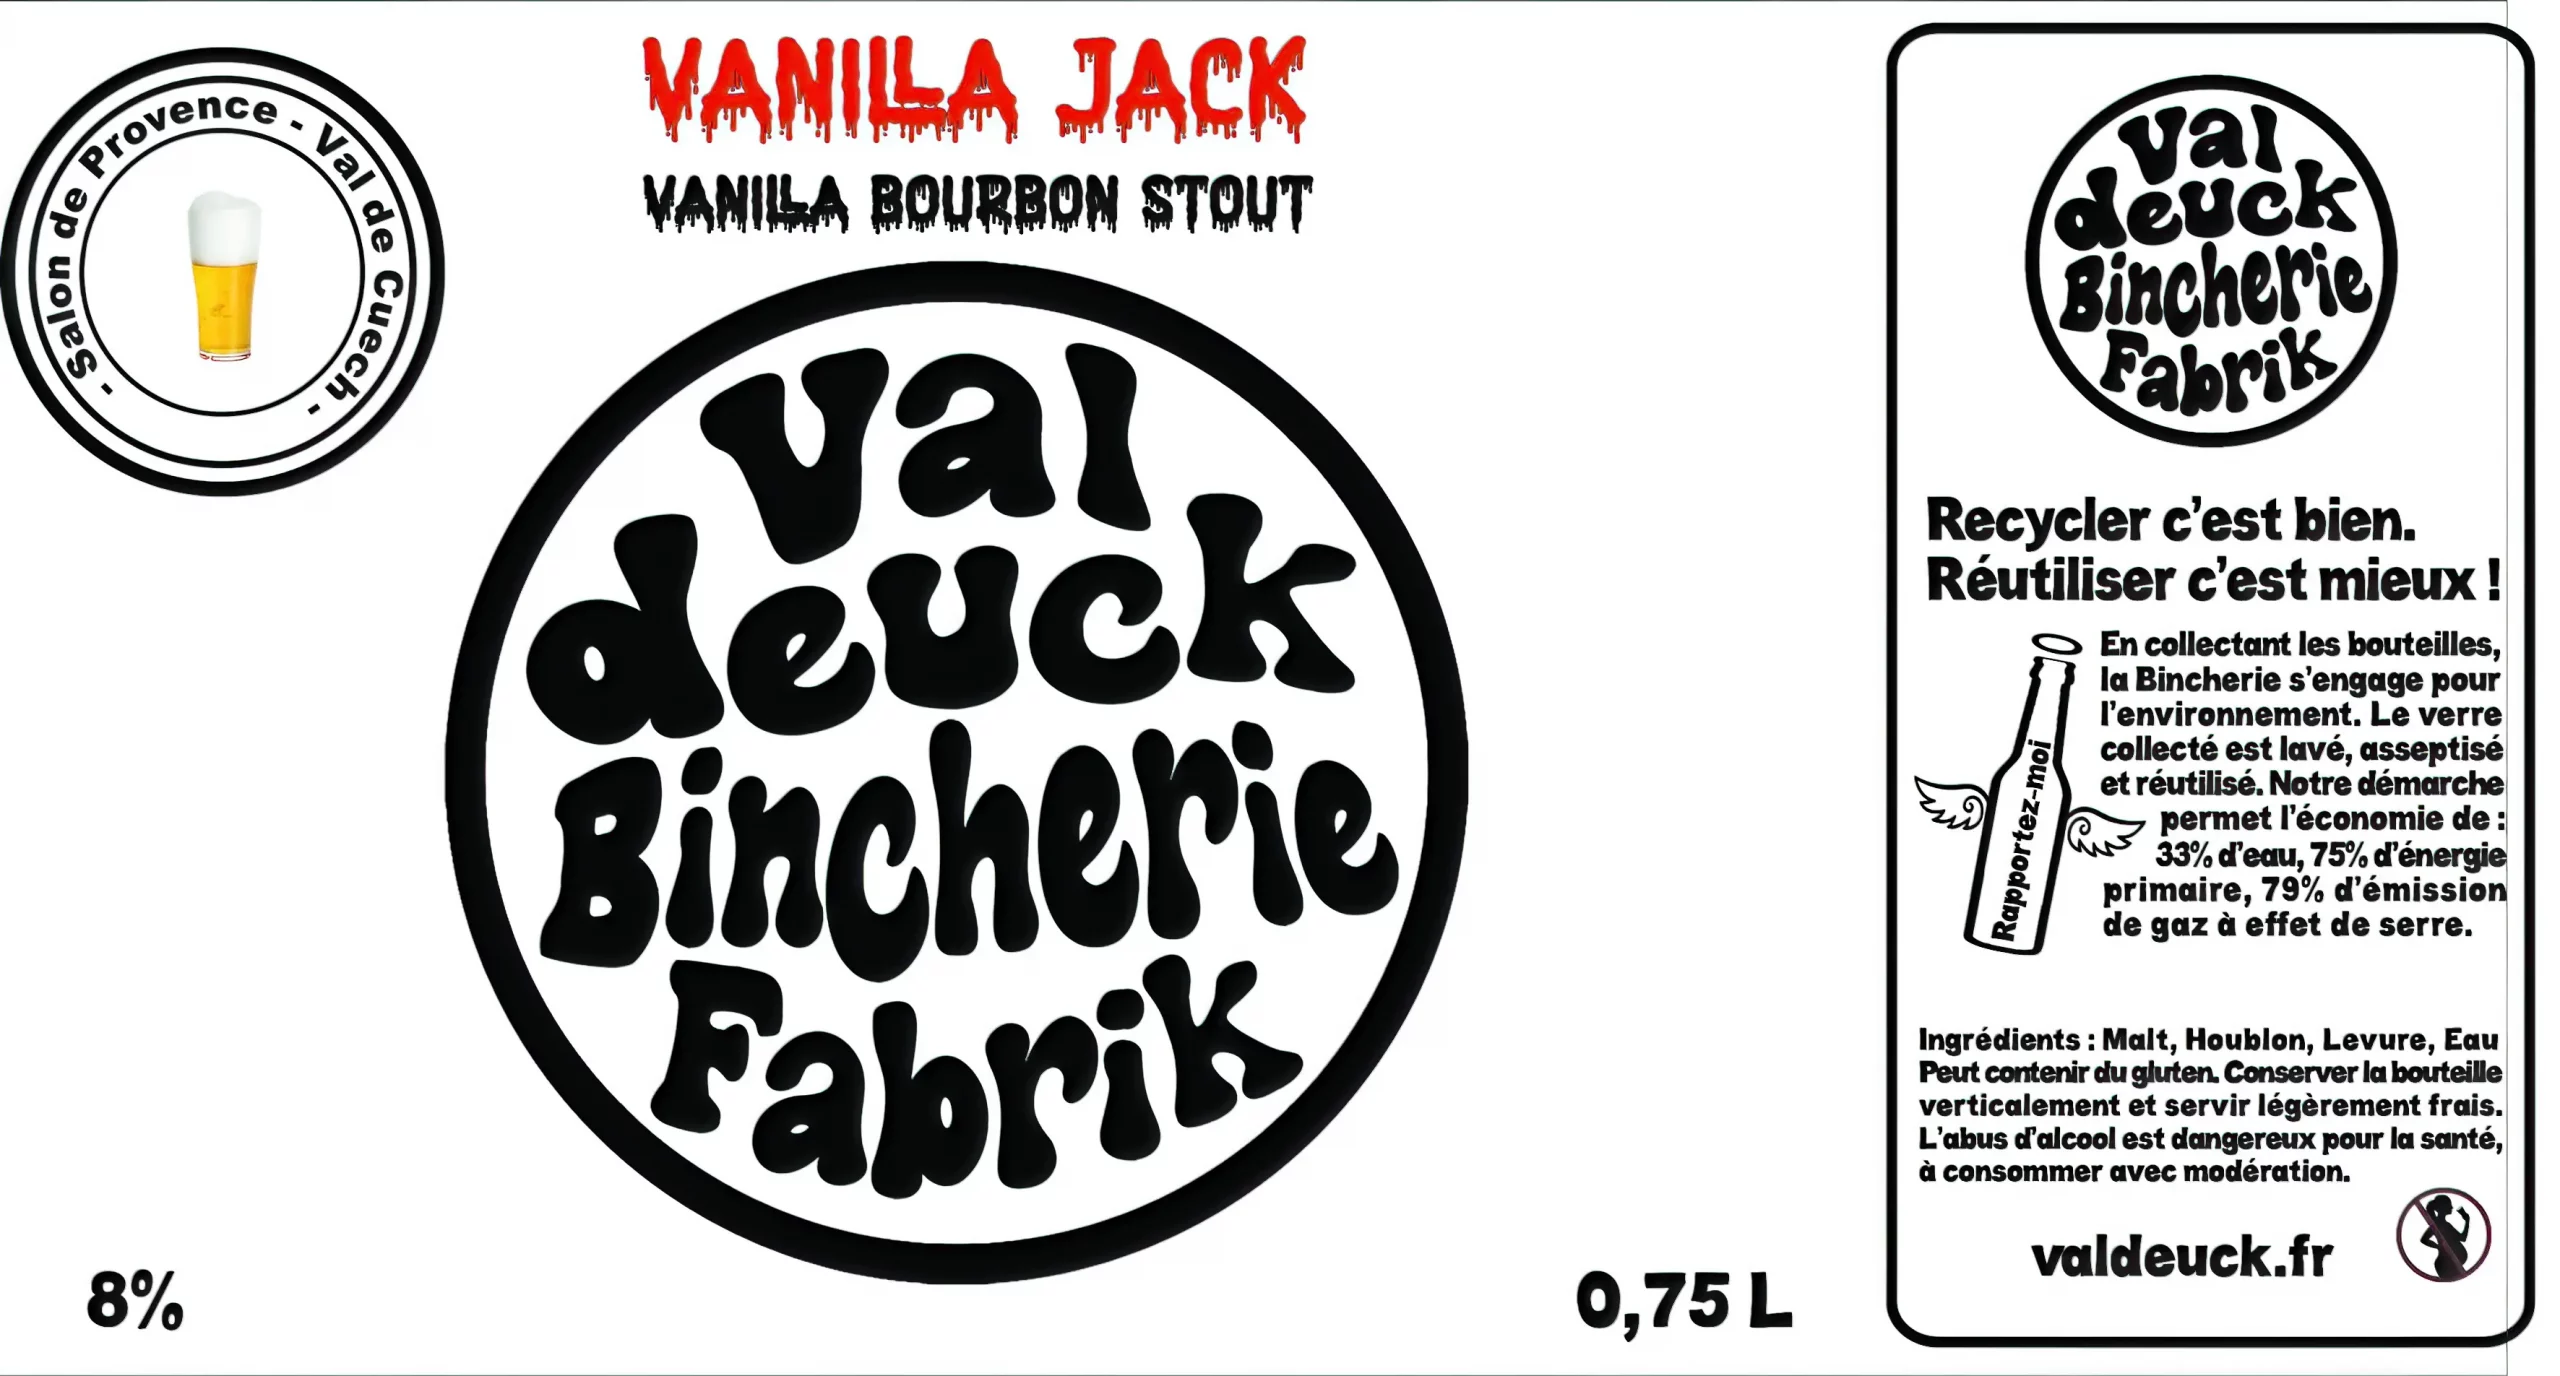 La Vanilla Jack (75cl) valdeuck bincherie fabrik salon de provence